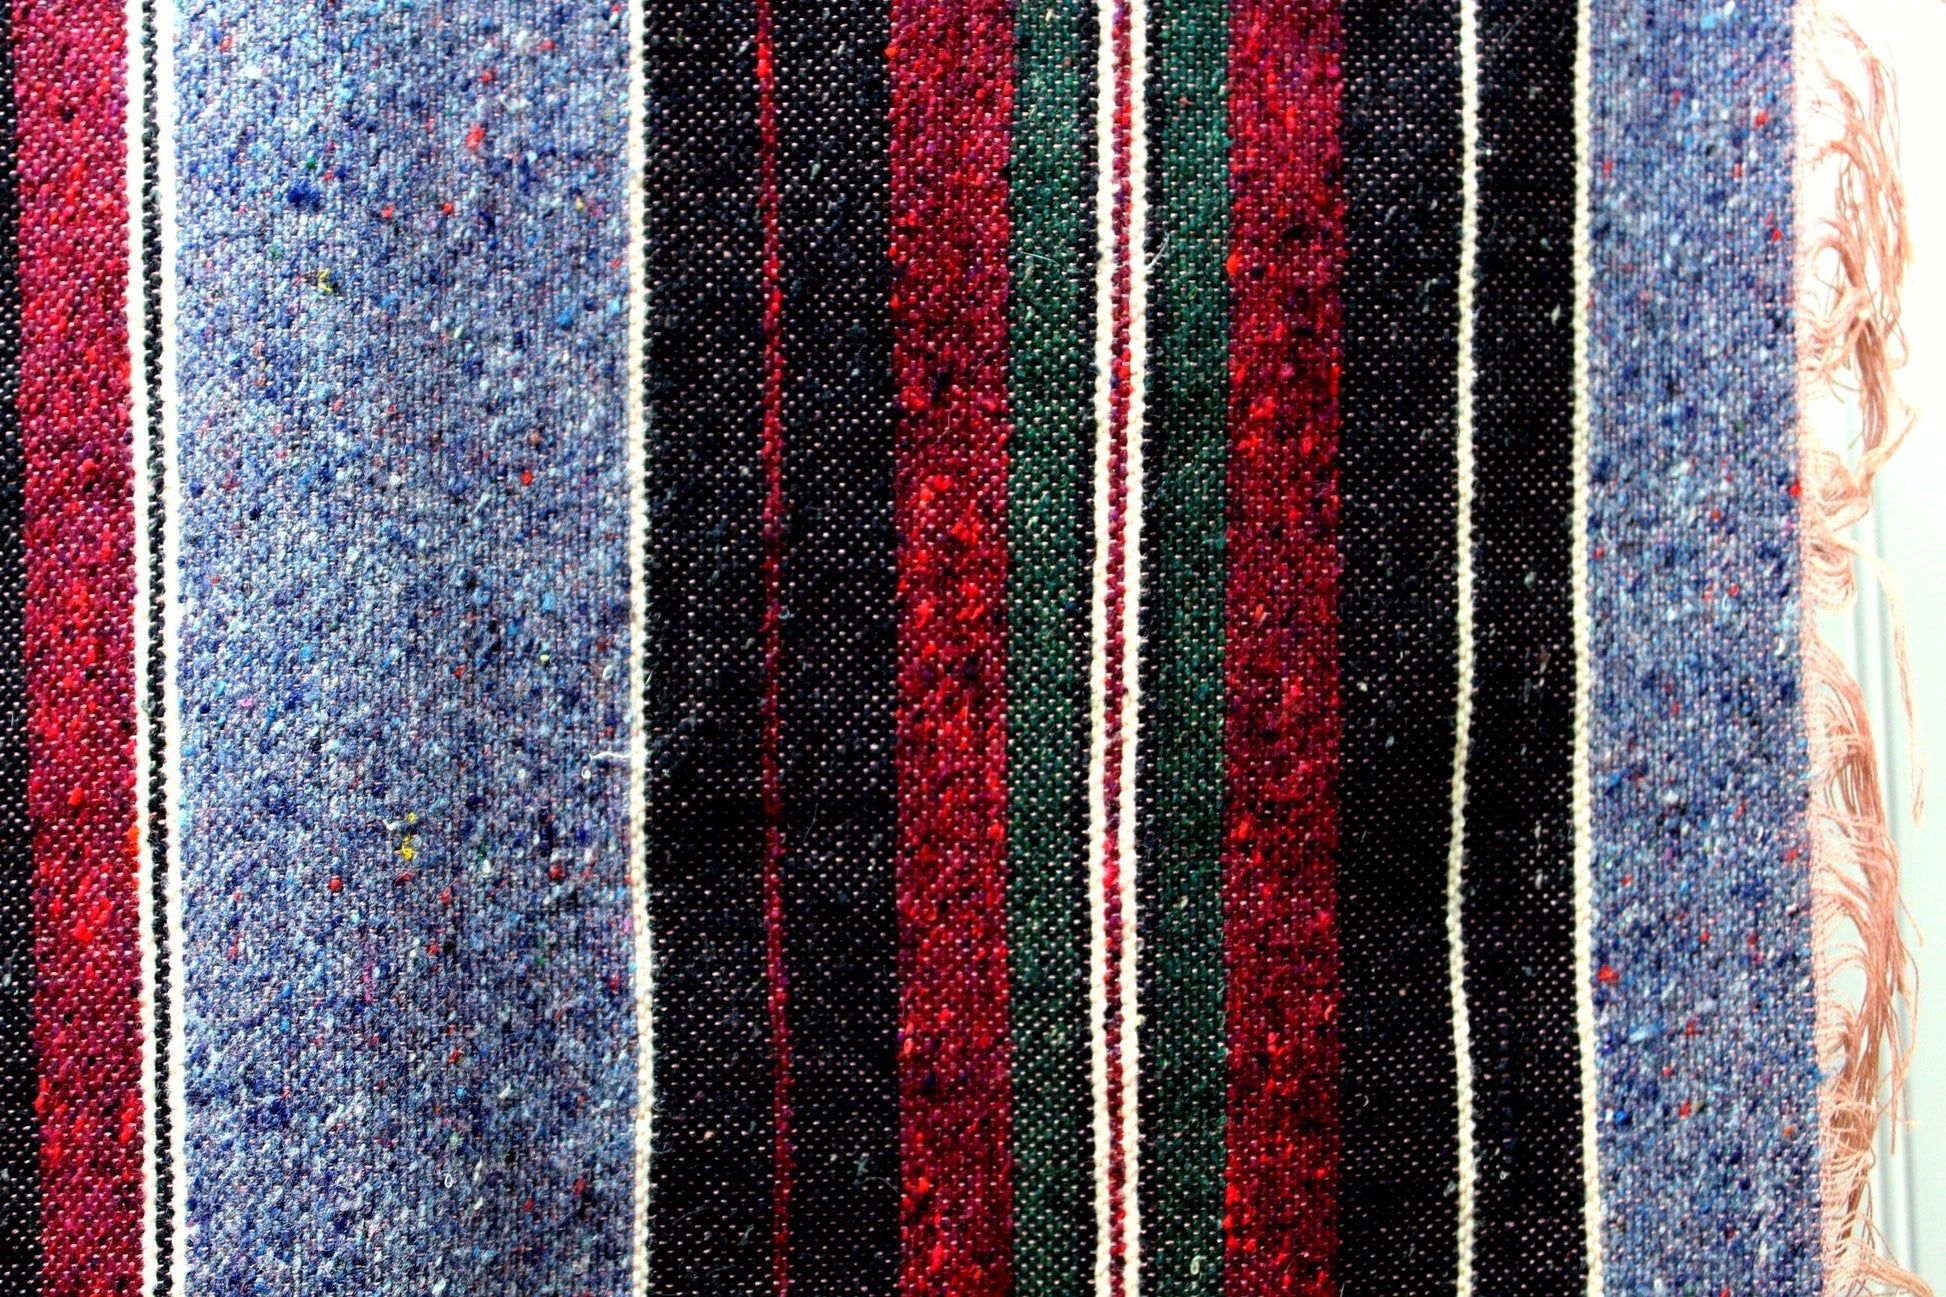 Fringed Blanket Travel Rug Loomed Dense Blues Purples Stripe 80" X 58" Decor OOAK decorator item